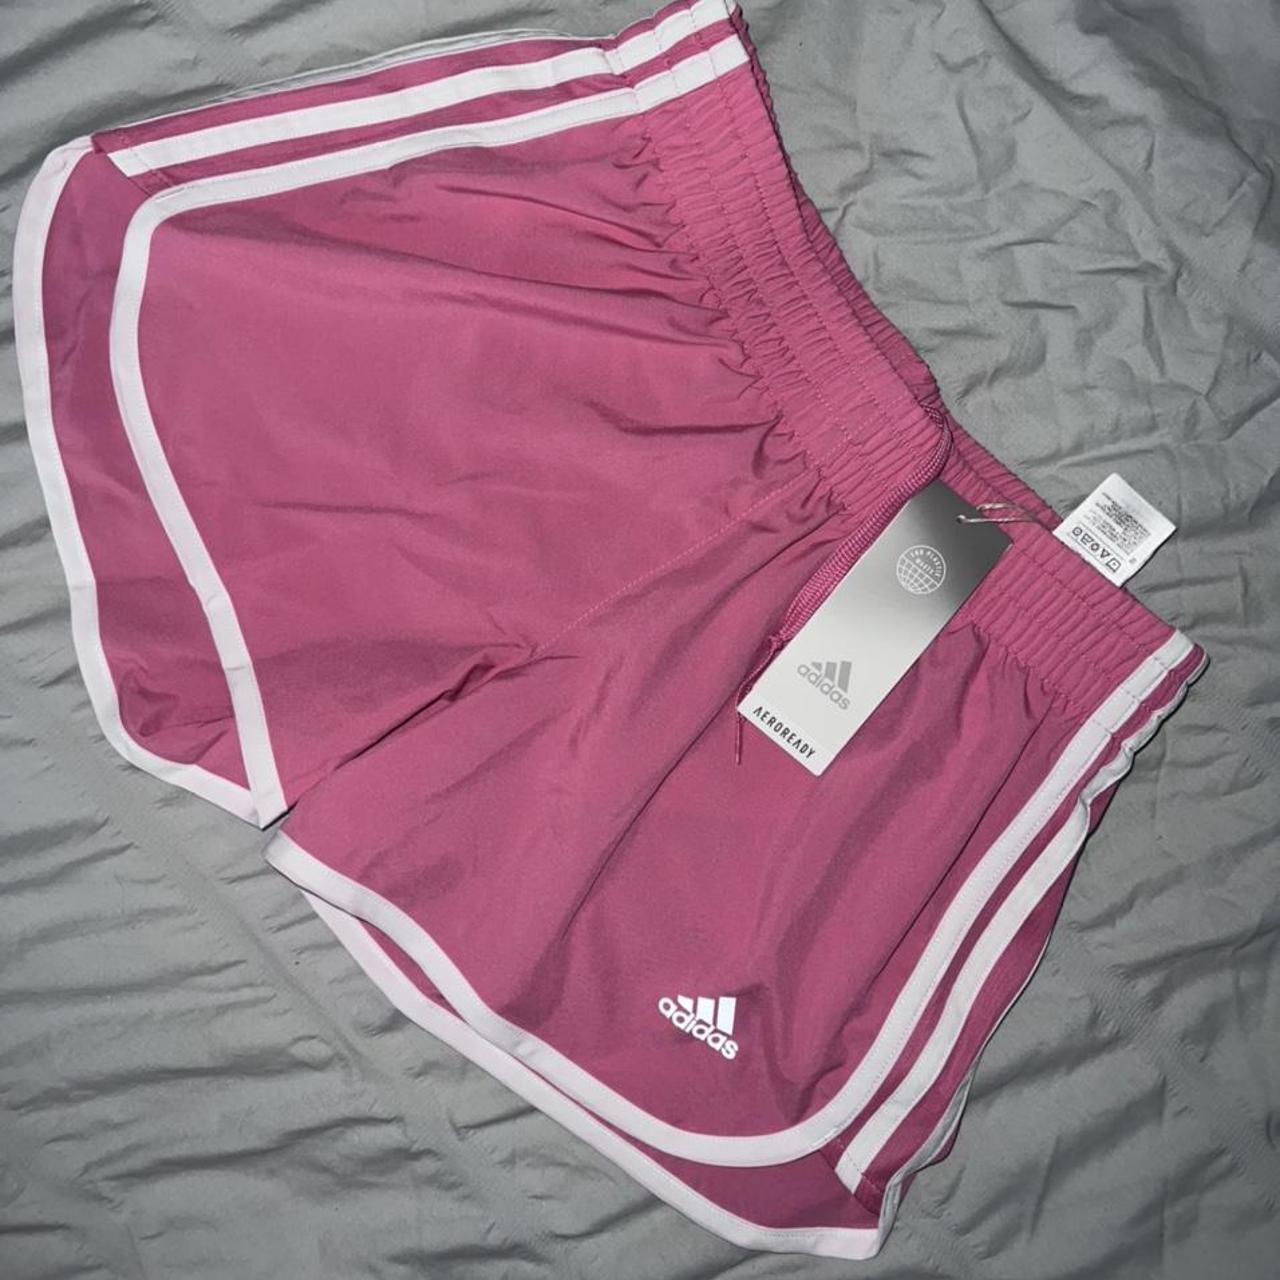 Adidas pink shorts with adjustable waist💗 Size 6... - Depop